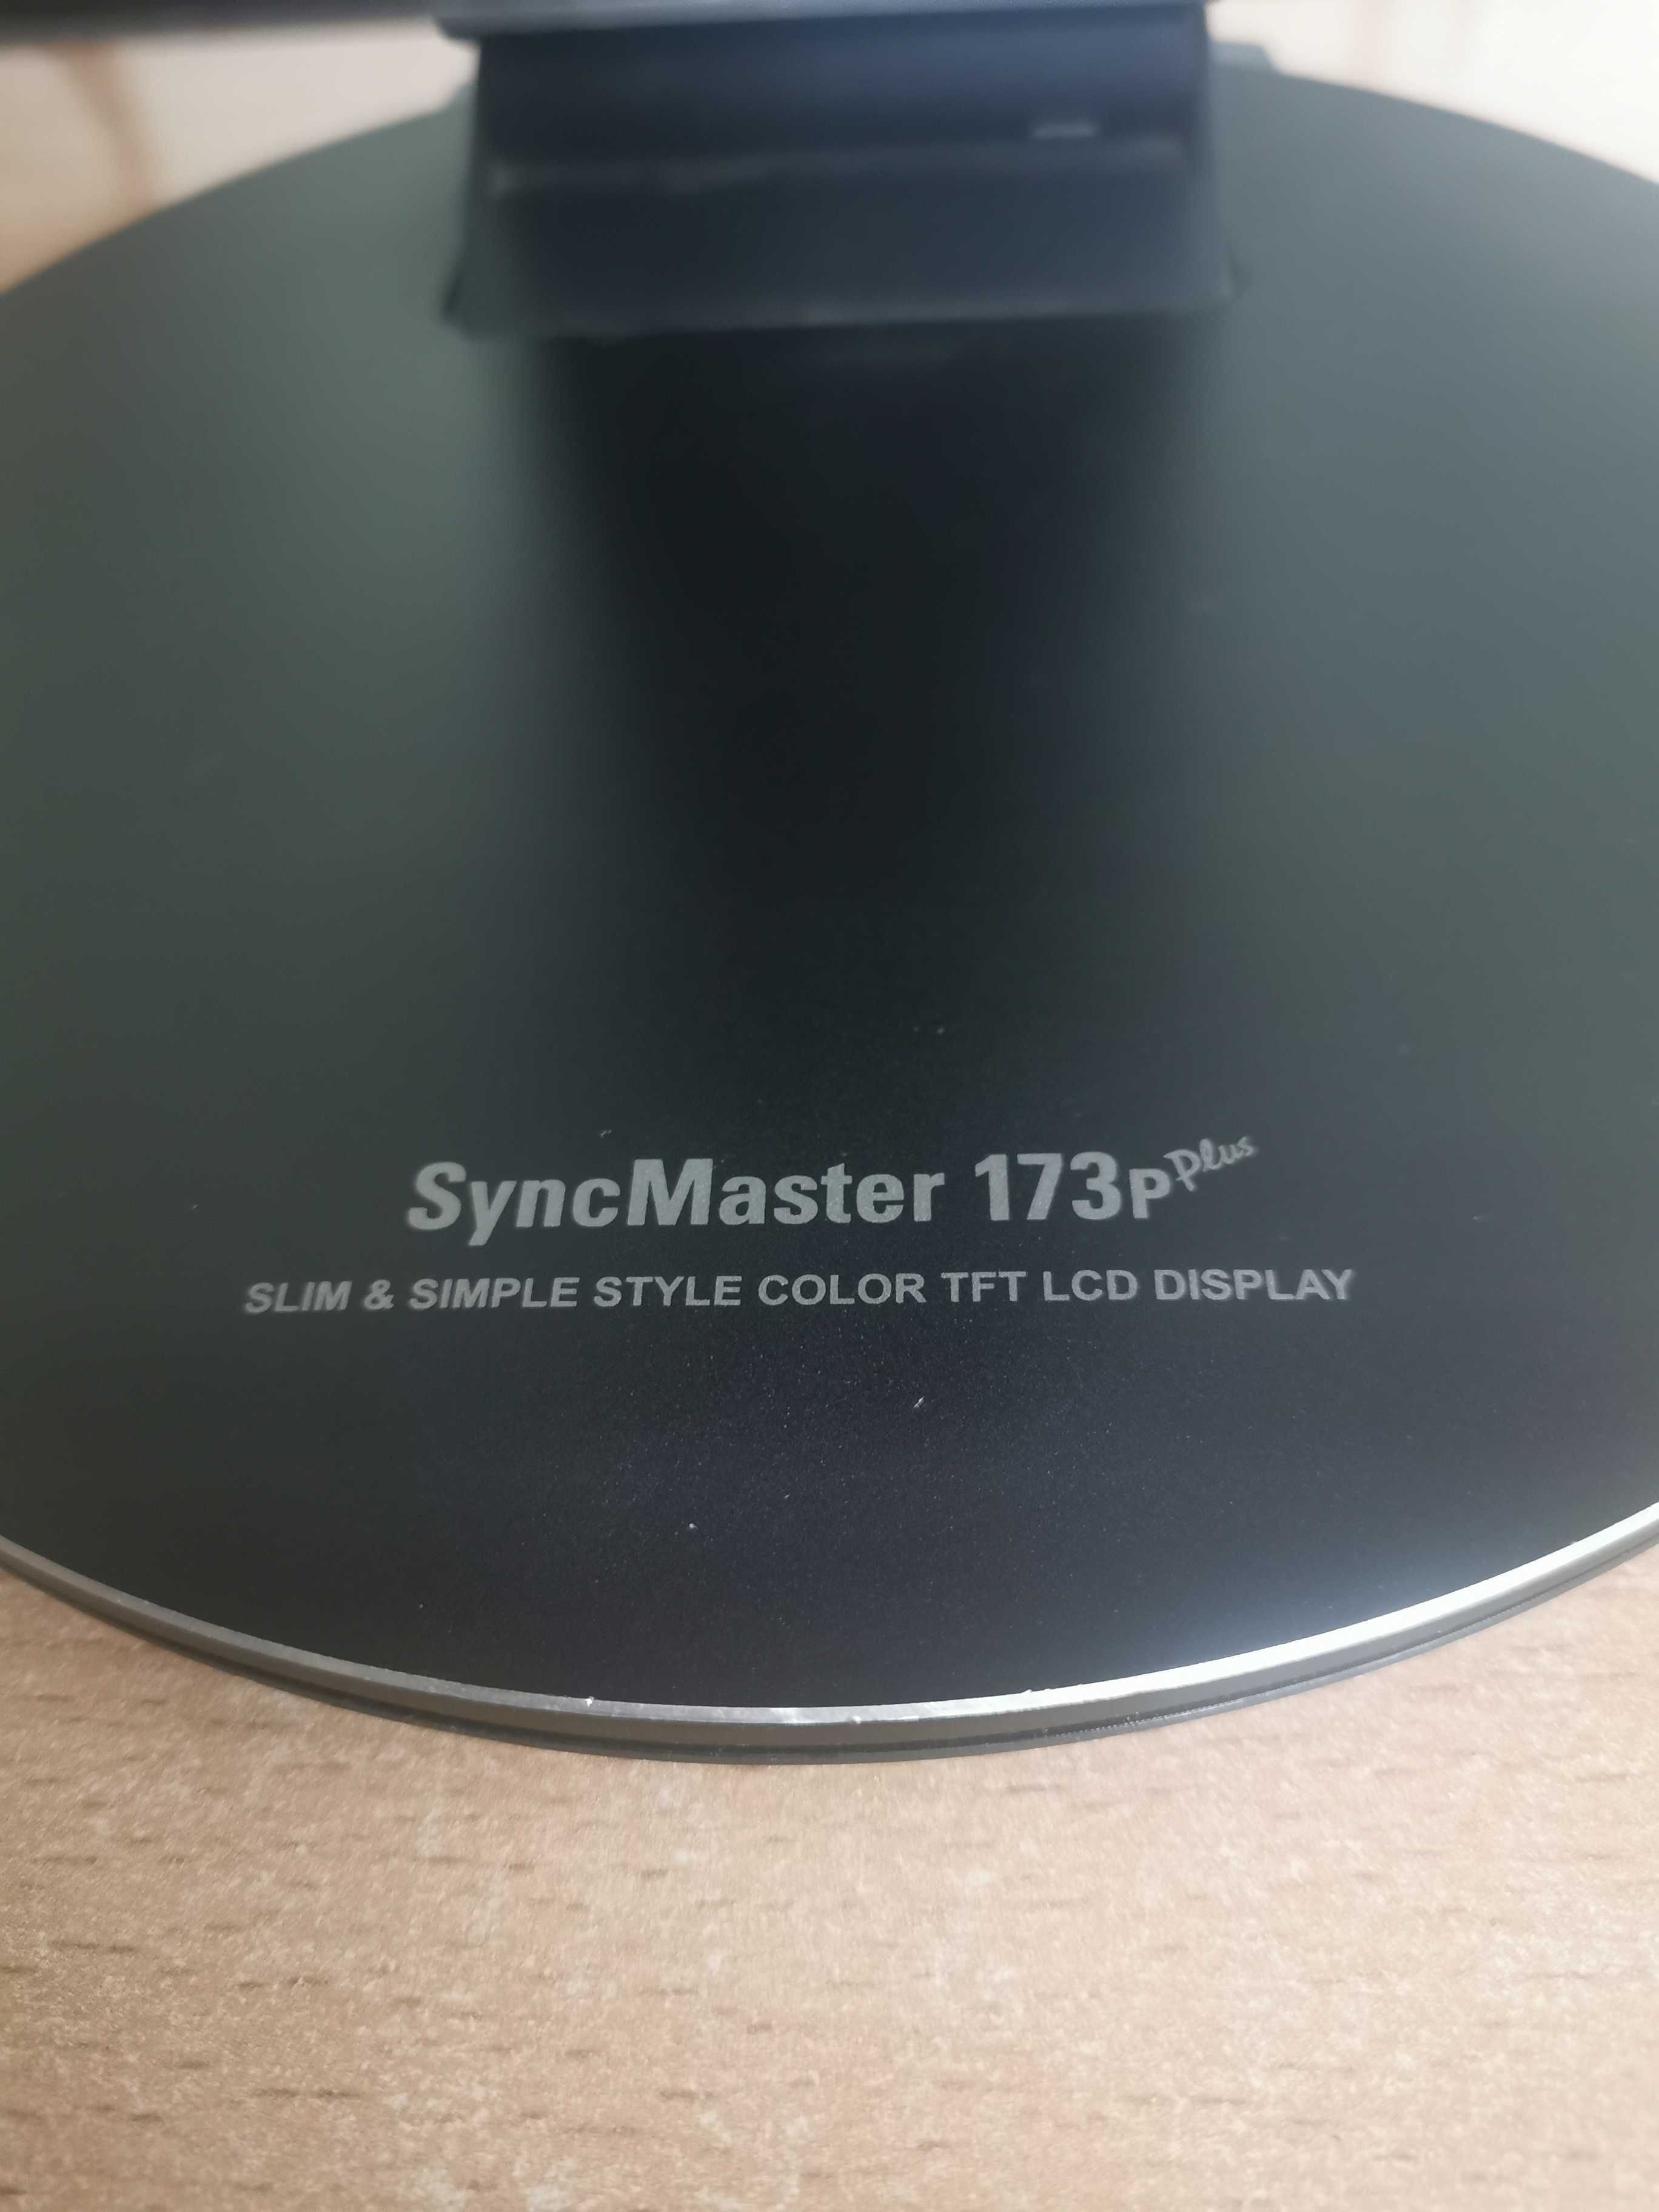 Monitor Samsung 17" SyncMaster 173p plus